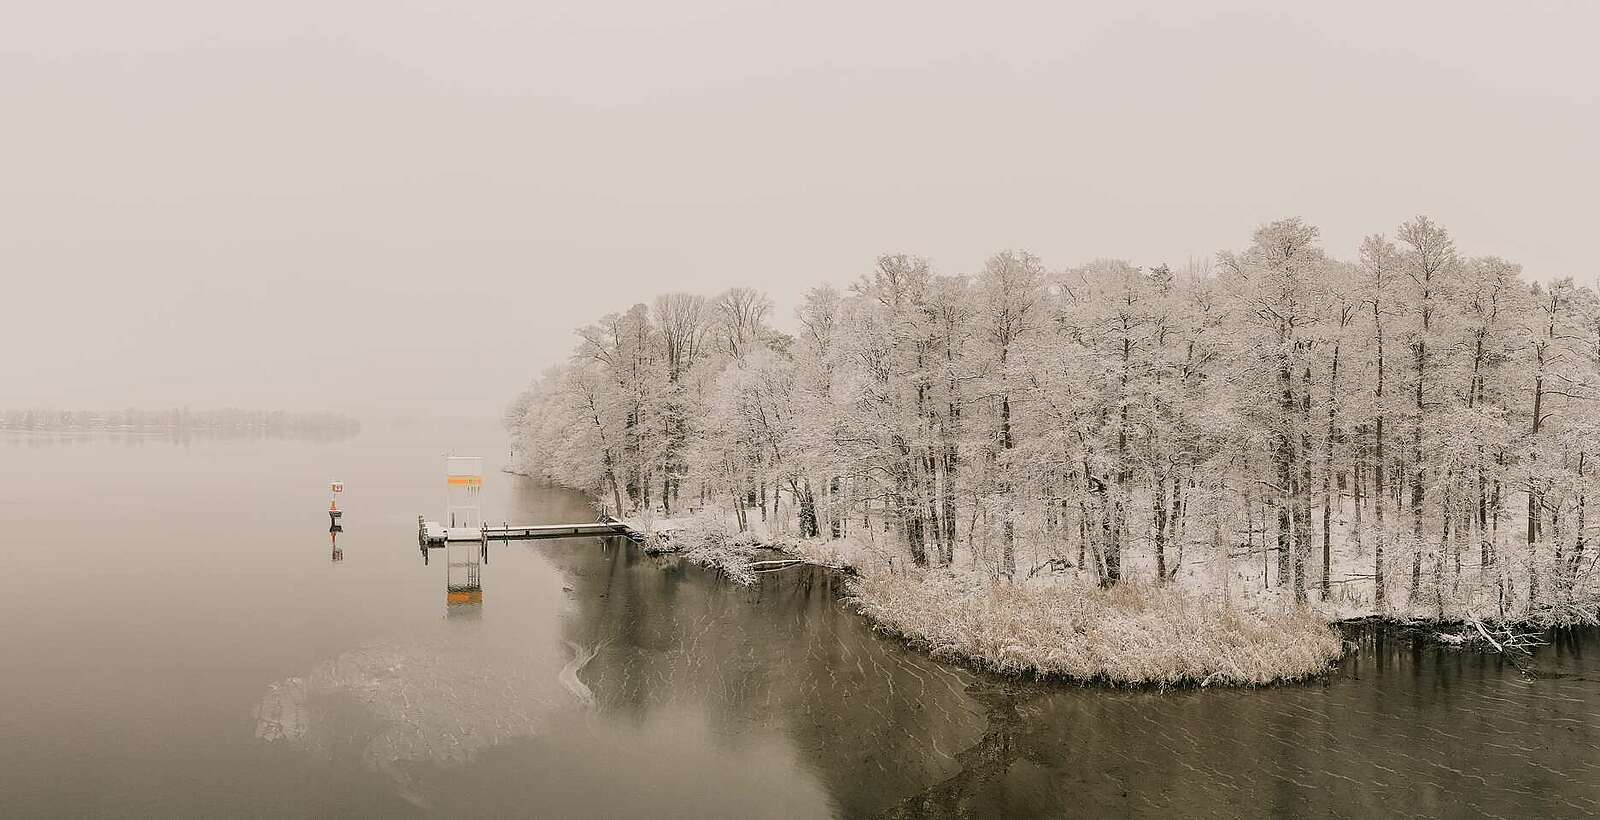 Dahme im Winter,
        
    

        Foto: Tourismusverband Dahme-Seenland e.V./Malte Jäger